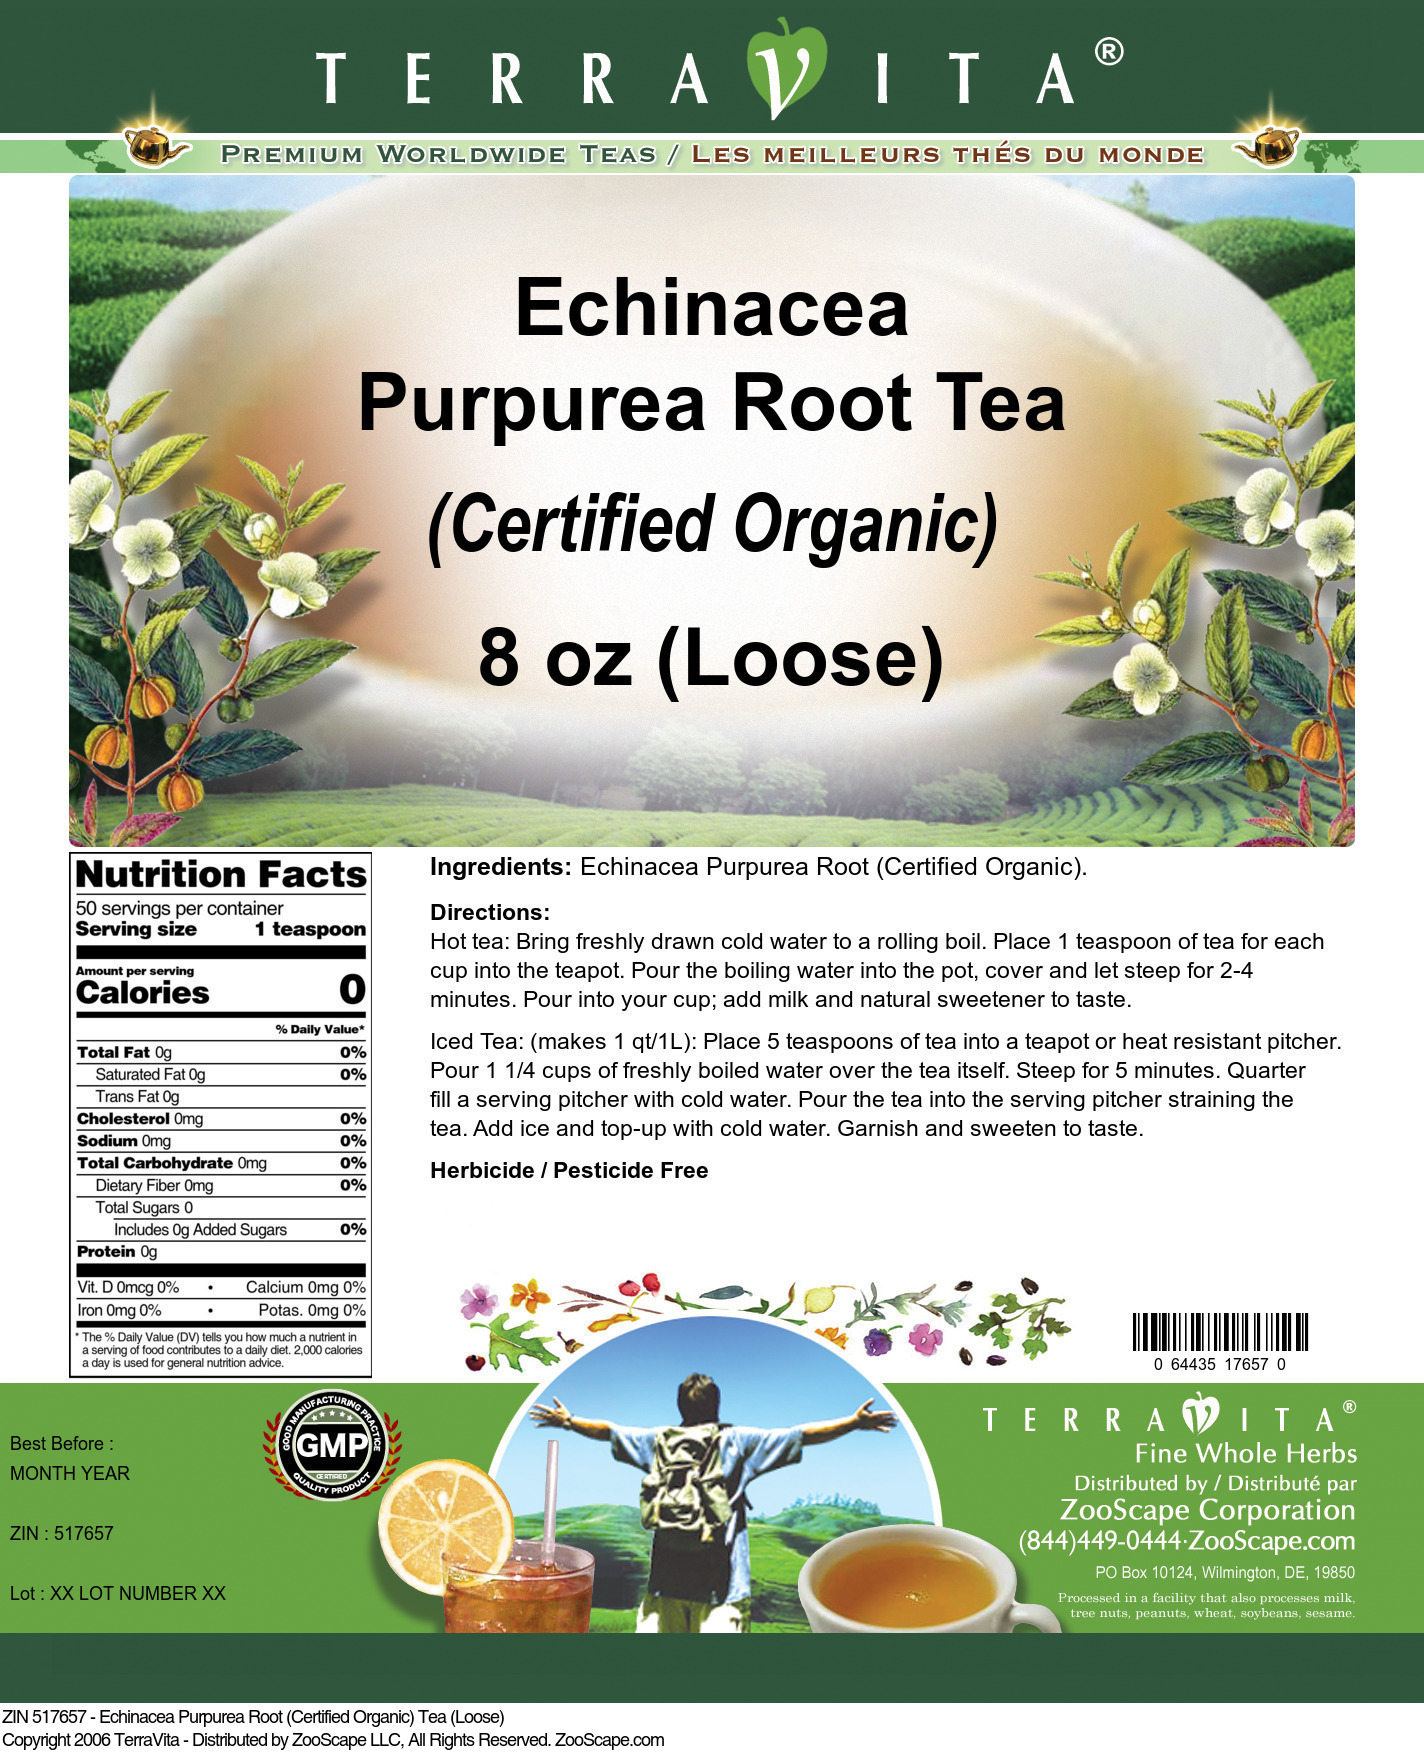 Echinacea Purpurea Root (Certified Organic) Tea (Loose) - Label